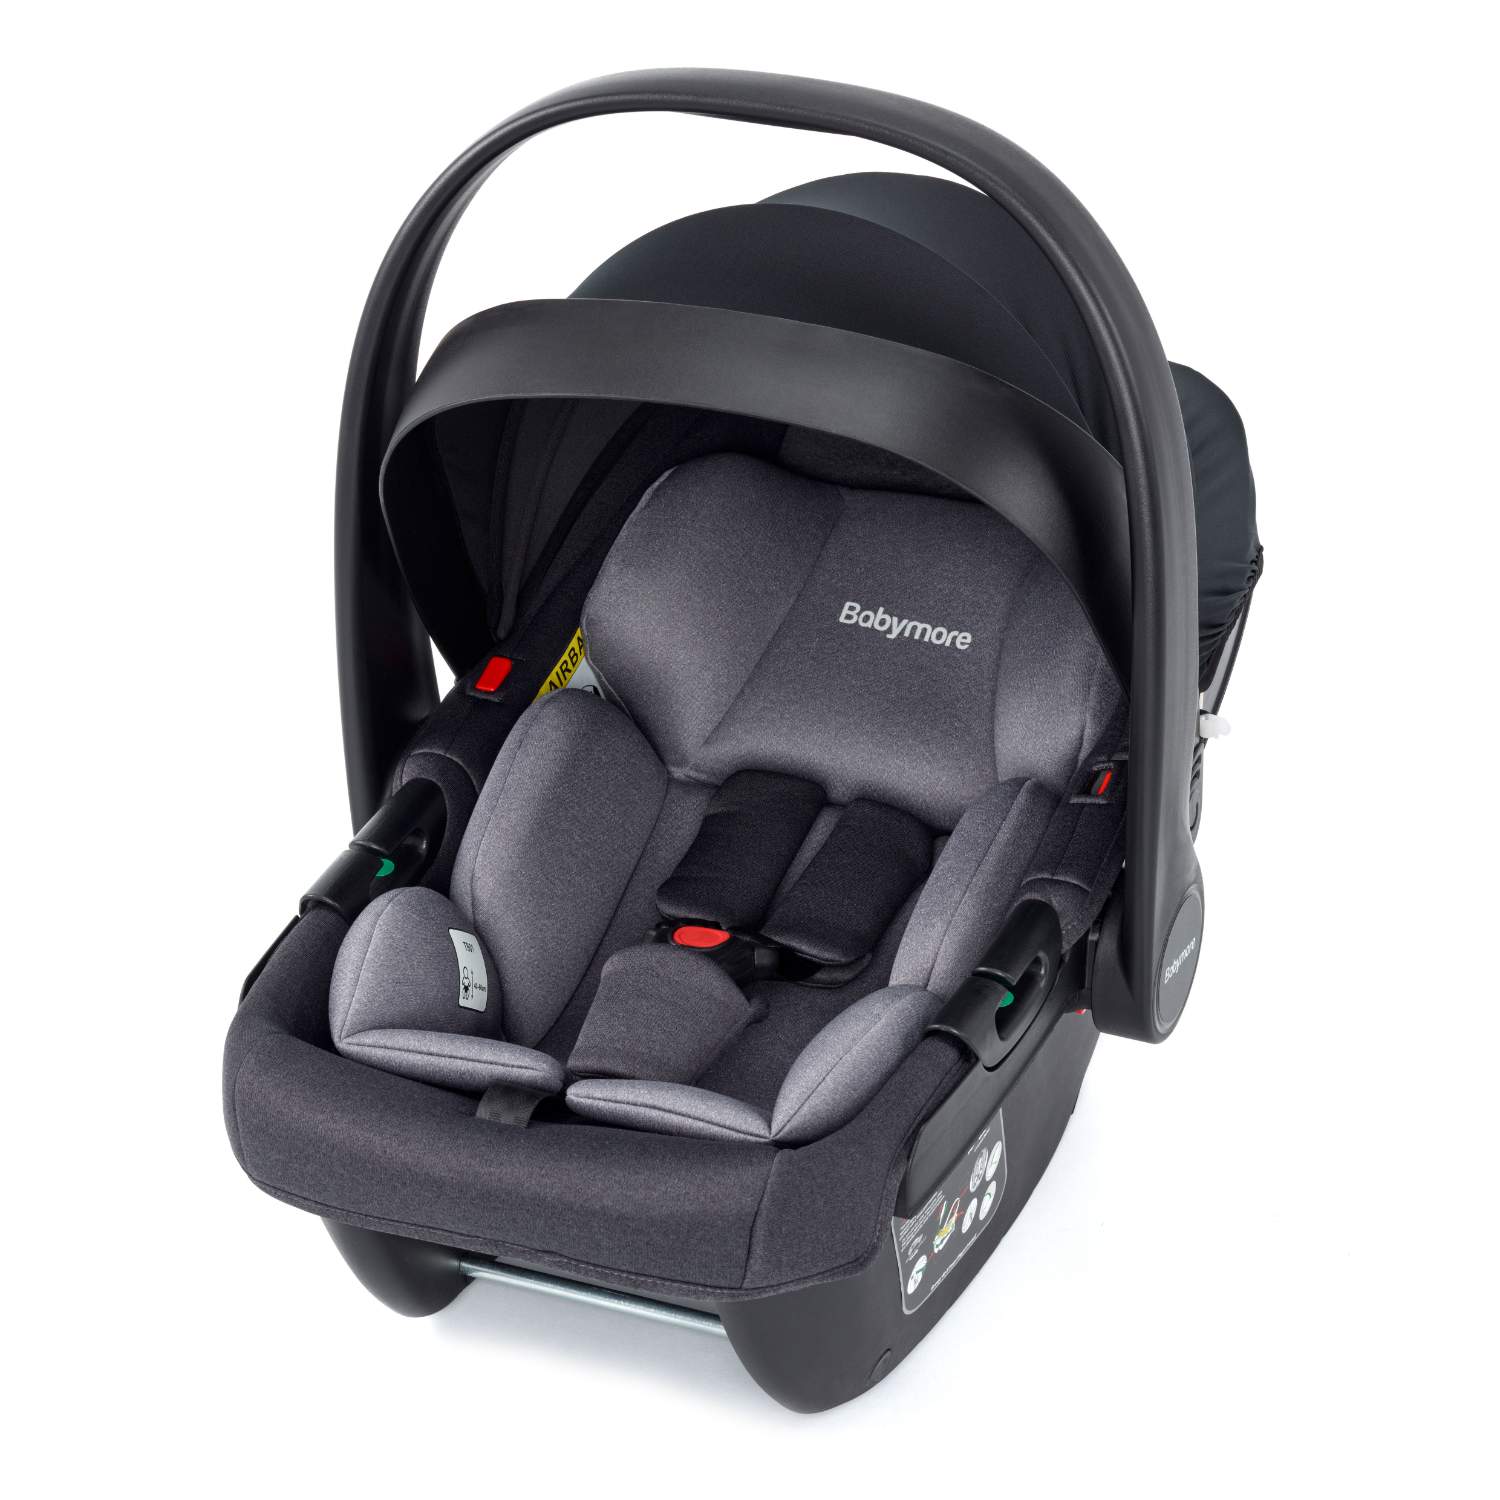 Coco i-Size infant car seat